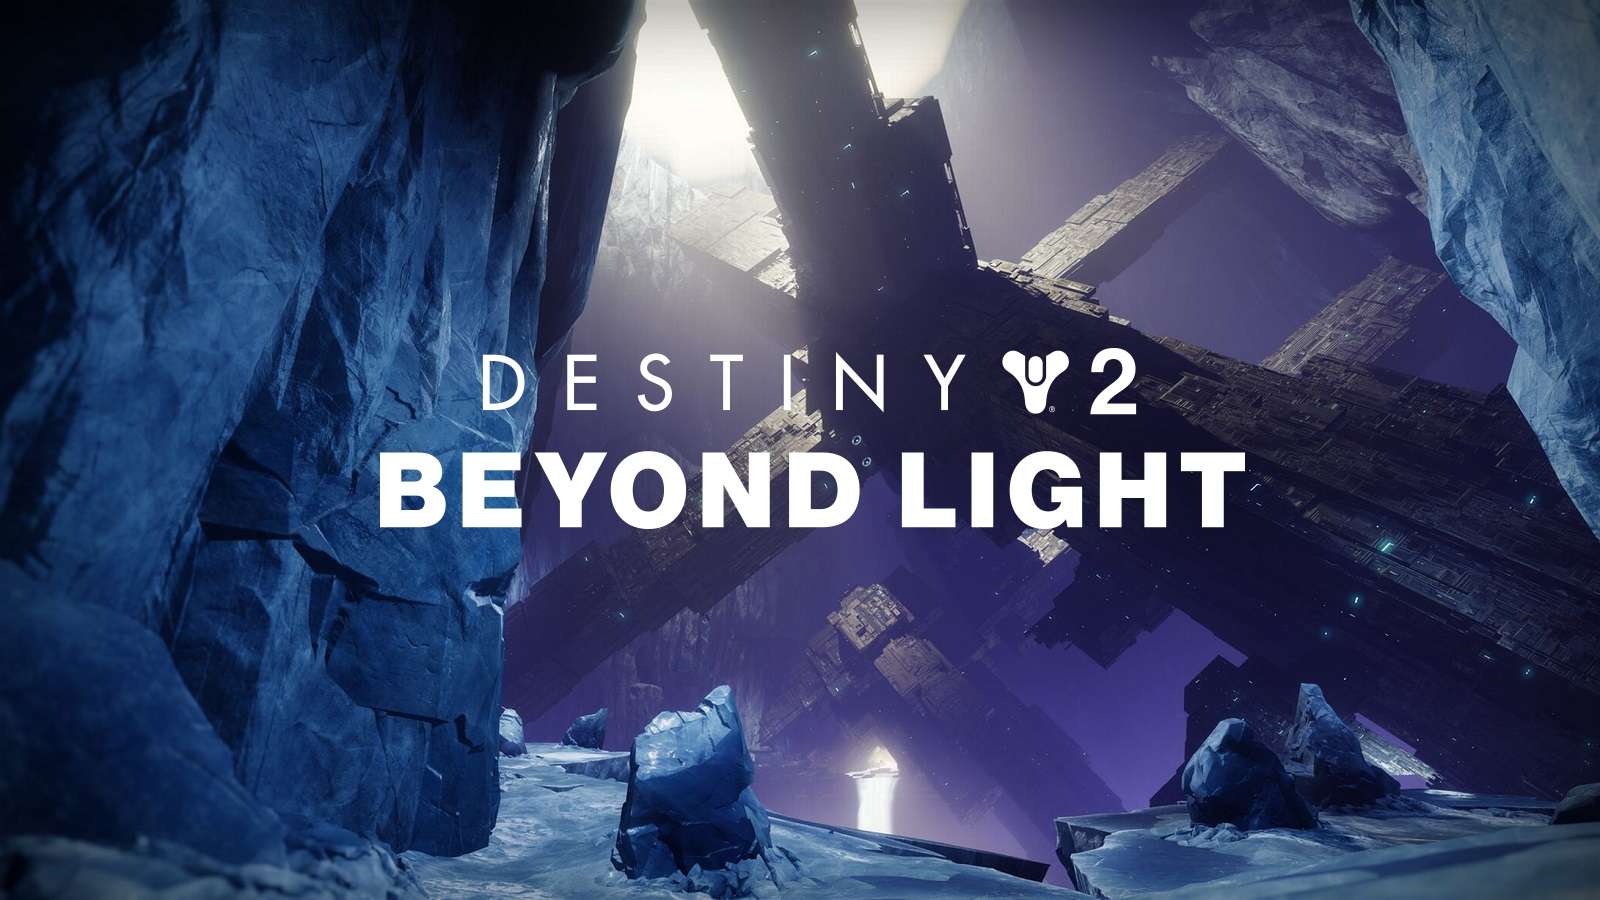 Destiny 2 Europa Vex With Beyond Light Text